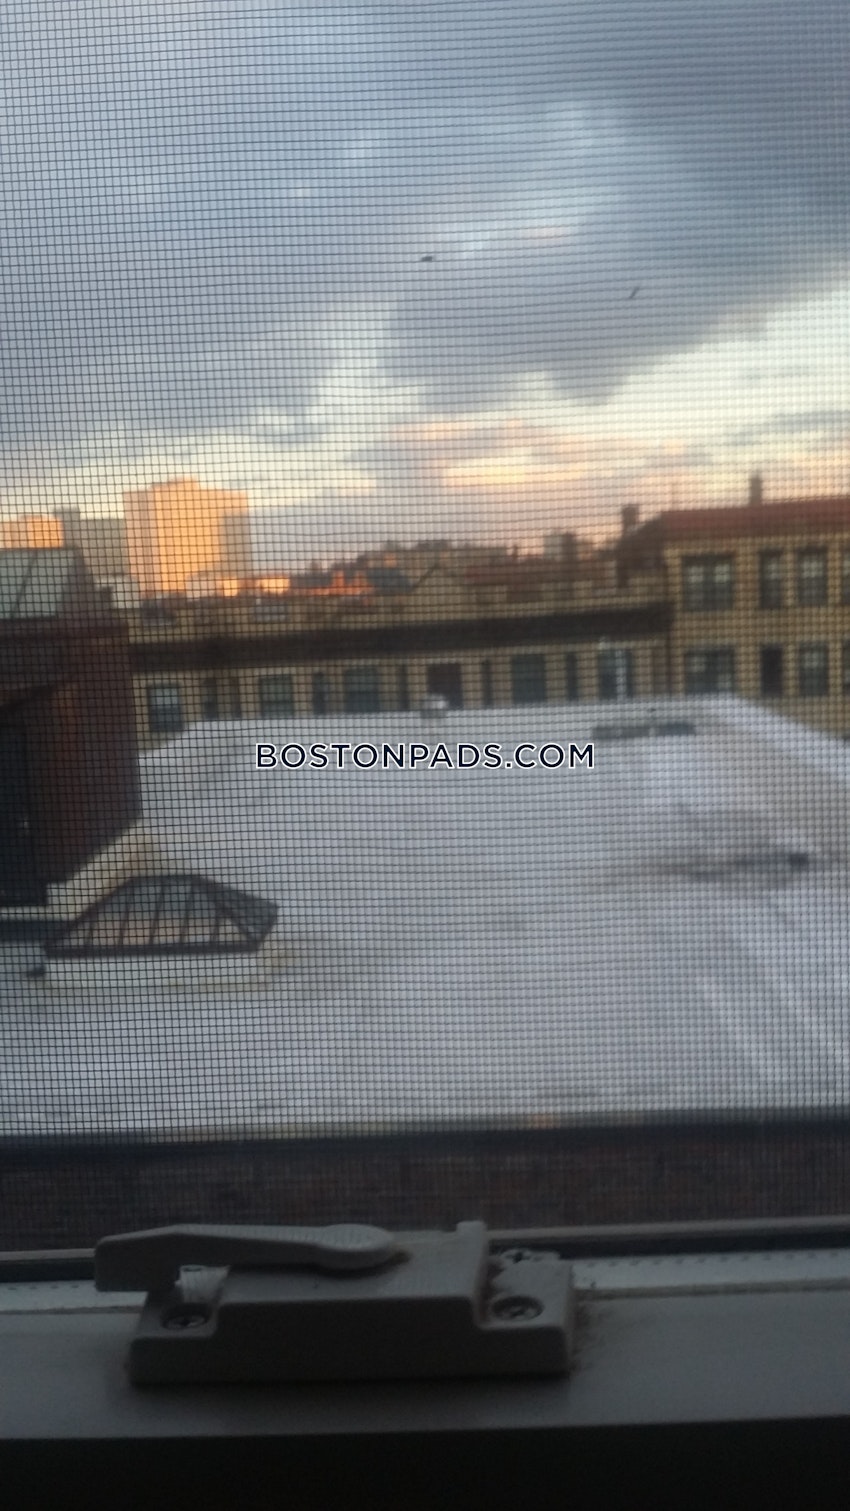 BOSTON - NORTHEASTERN/SYMPHONY - 2 Beds, 1 Bath - Image 18